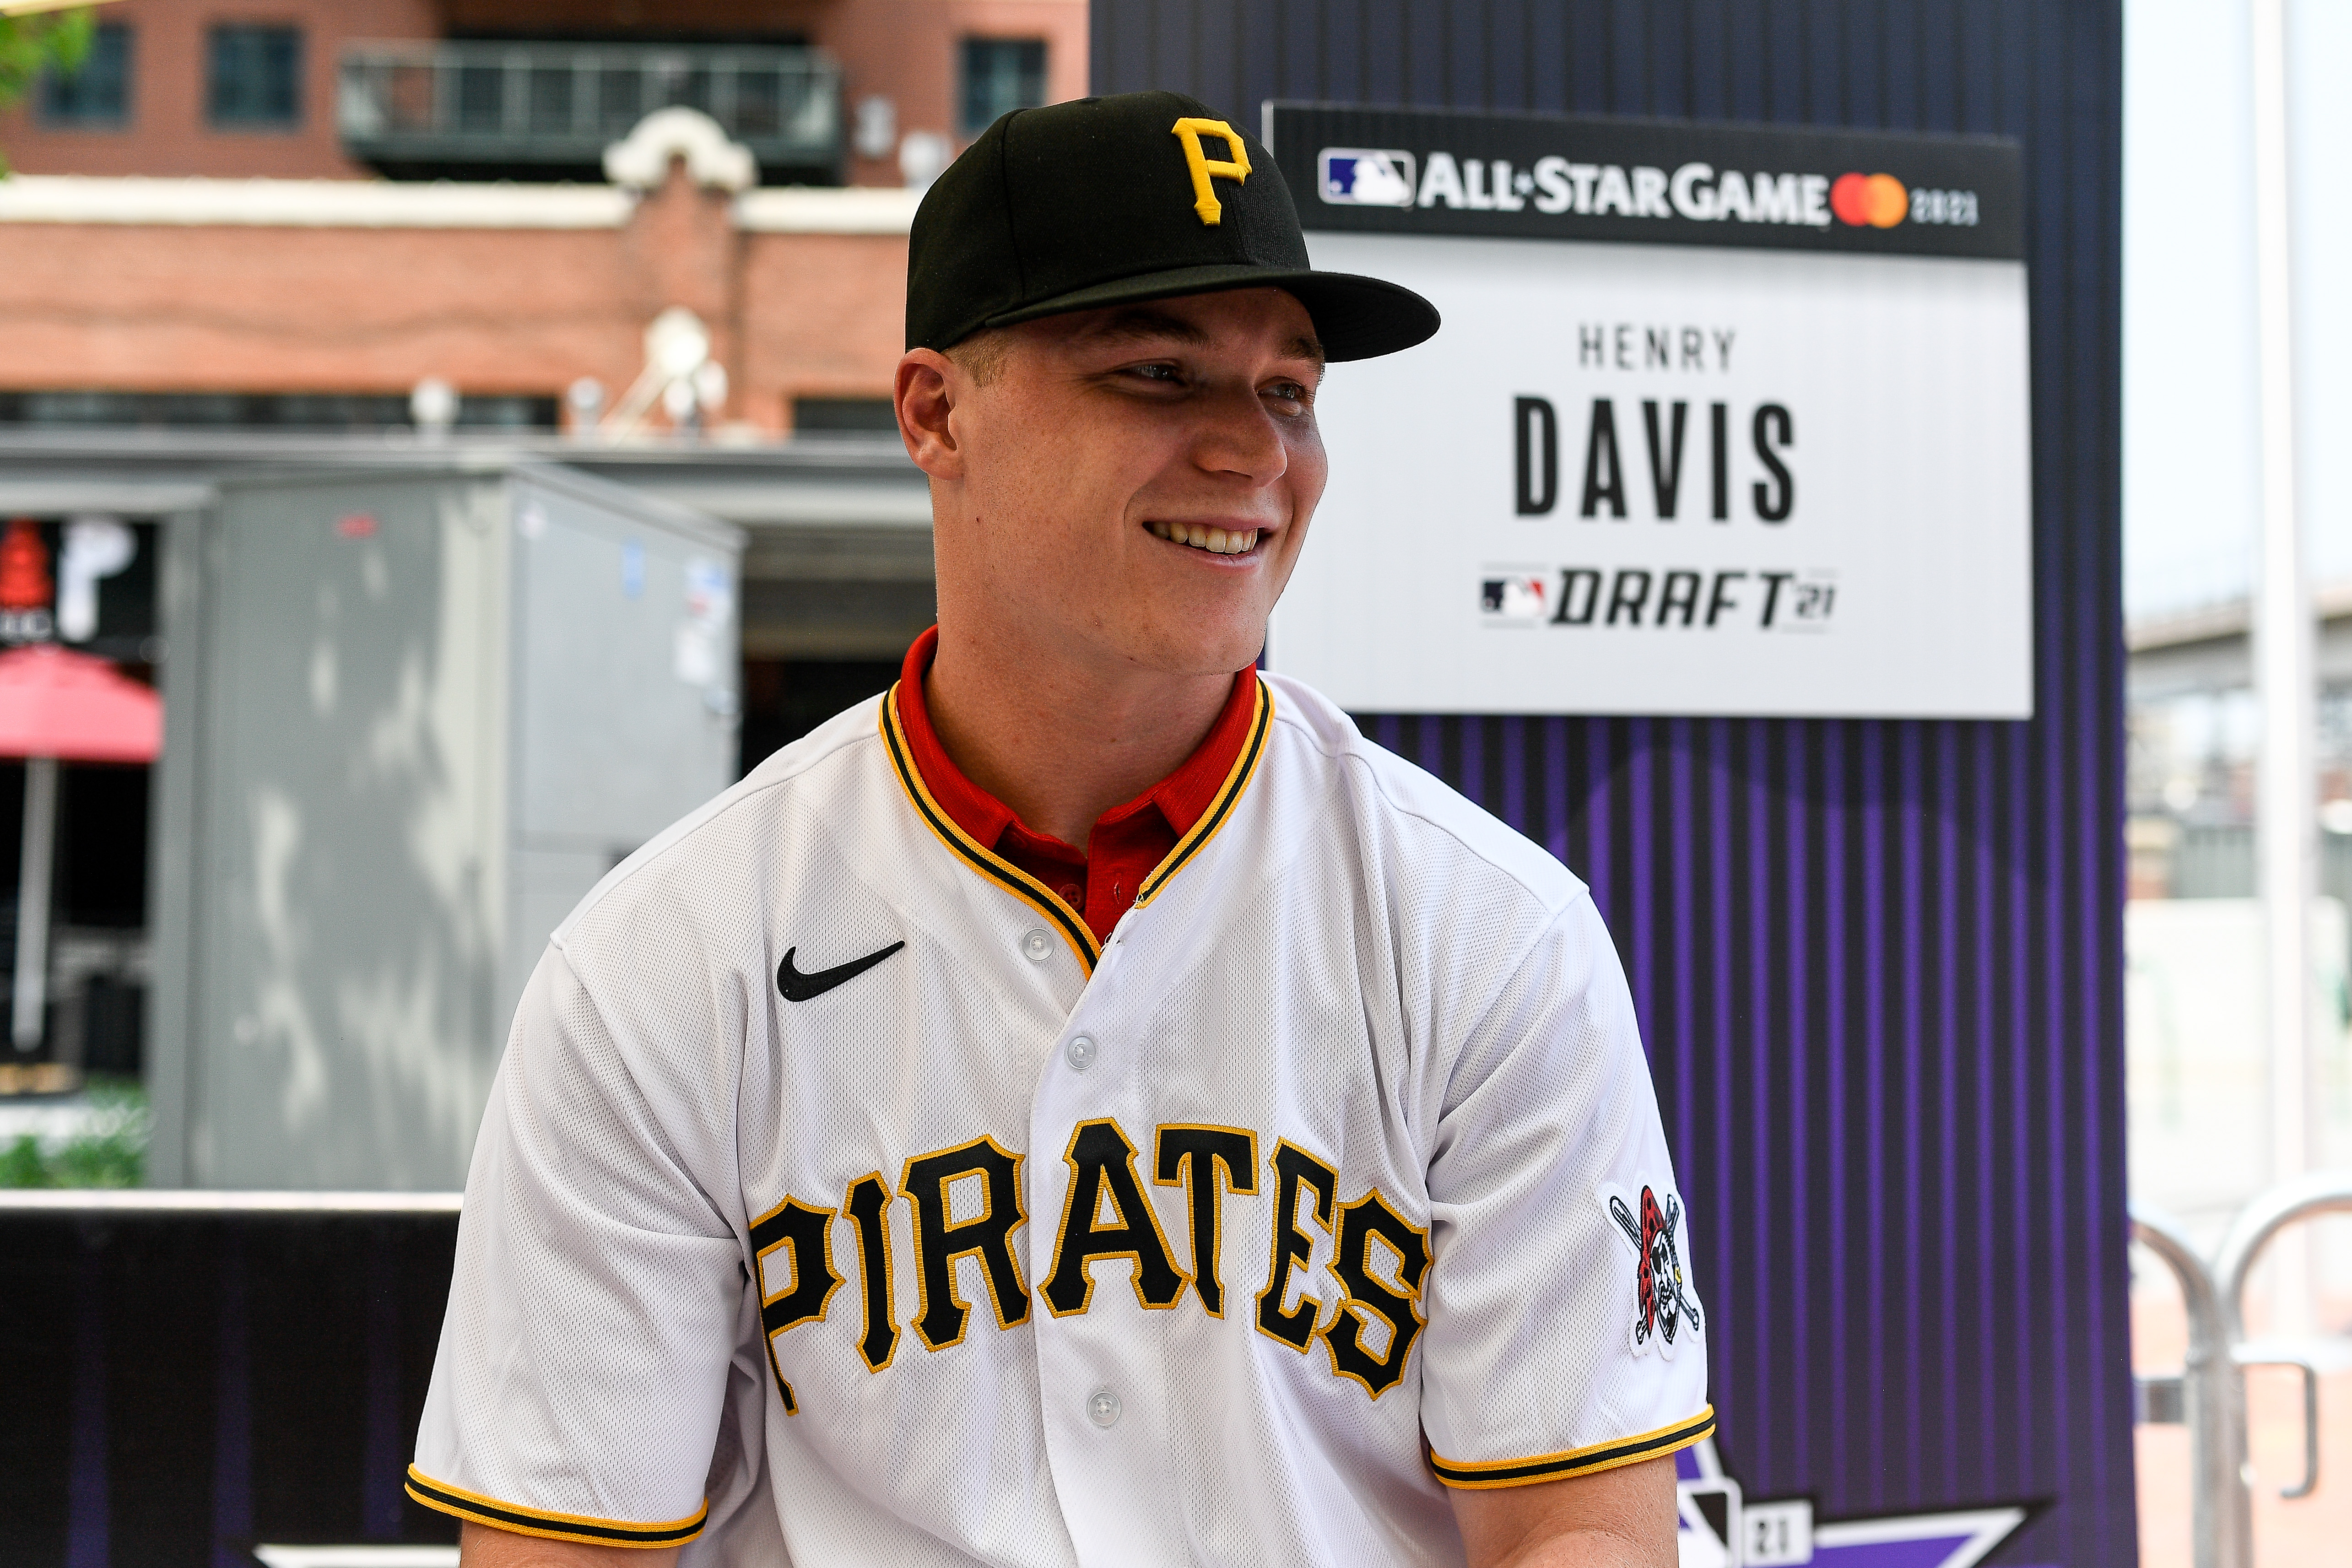 Pirates draft Louisville catcher Davis with top pick